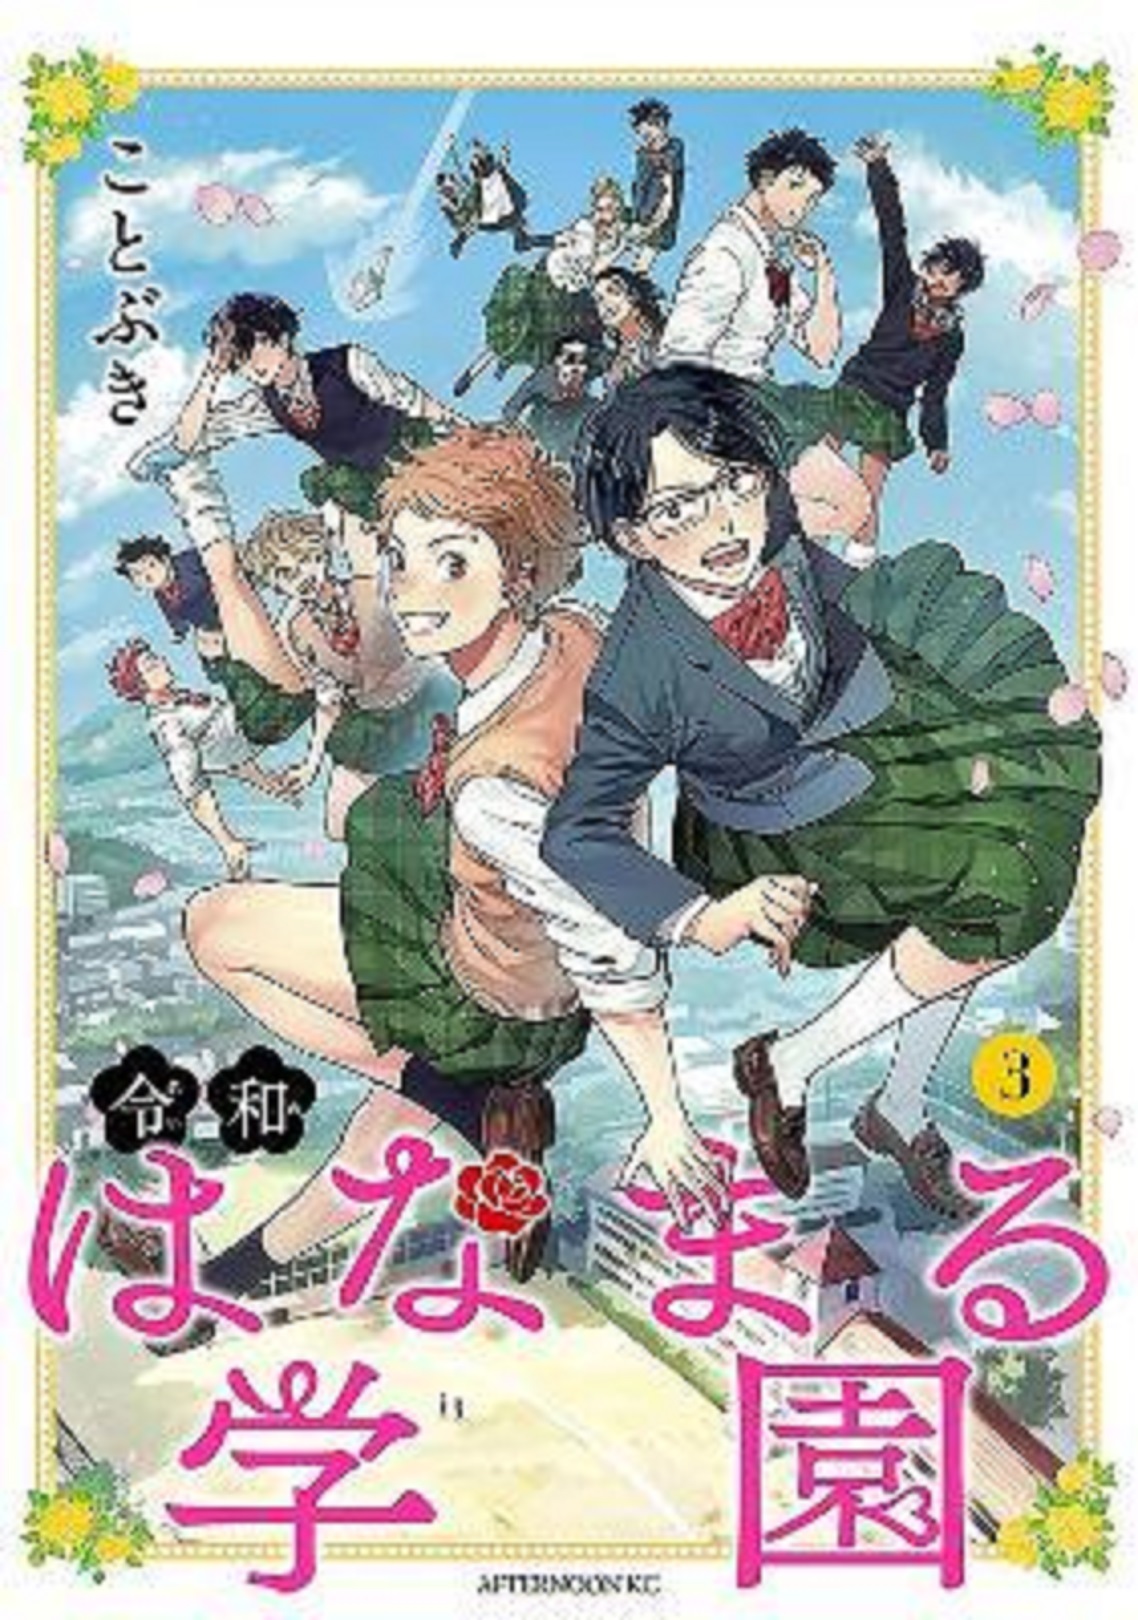 Thigh High: Reiwa Hanamaru Academy - Volume 3 | Kotobuki